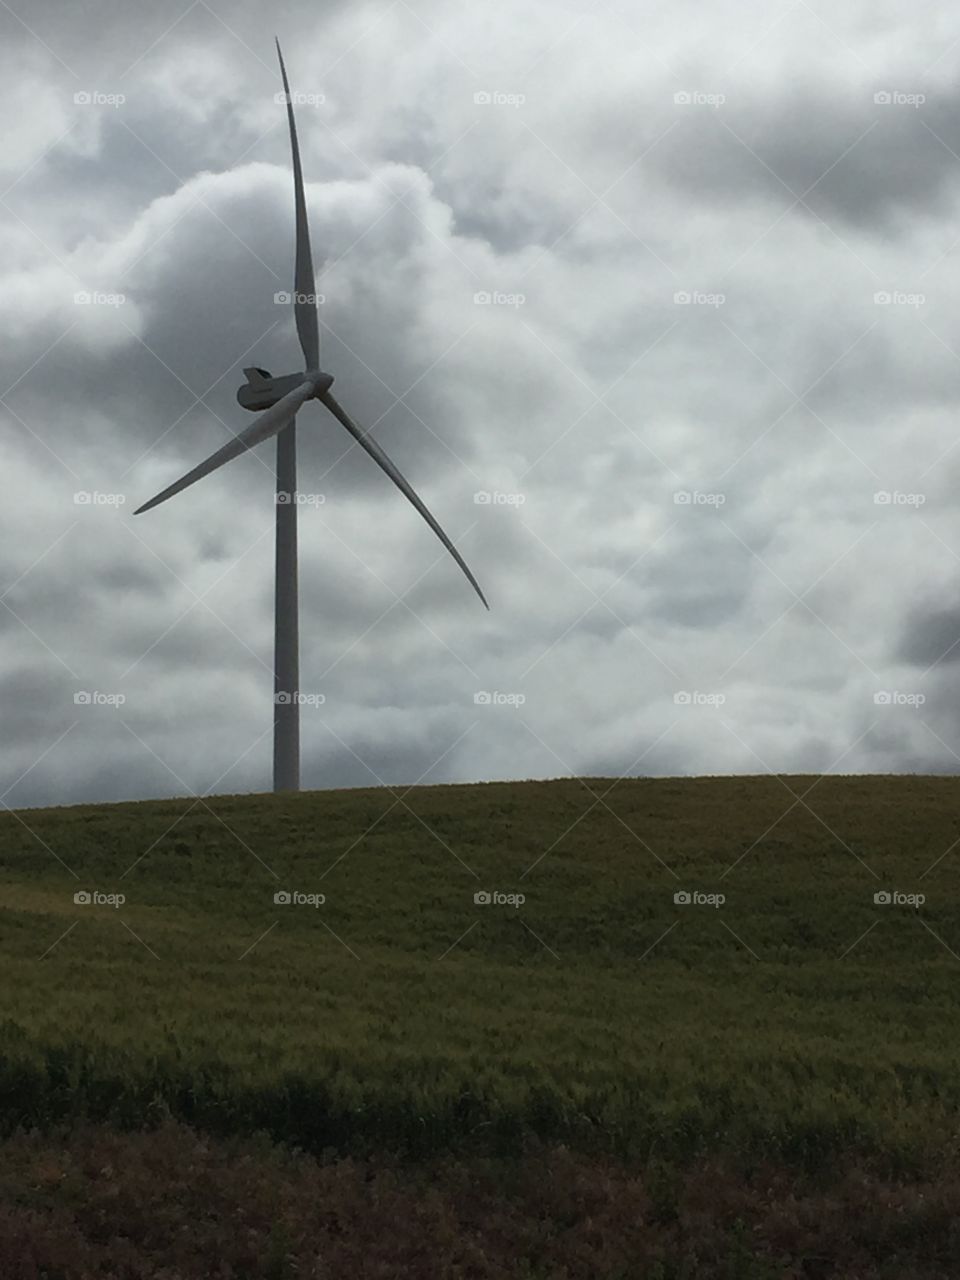 #windpower #windmill 